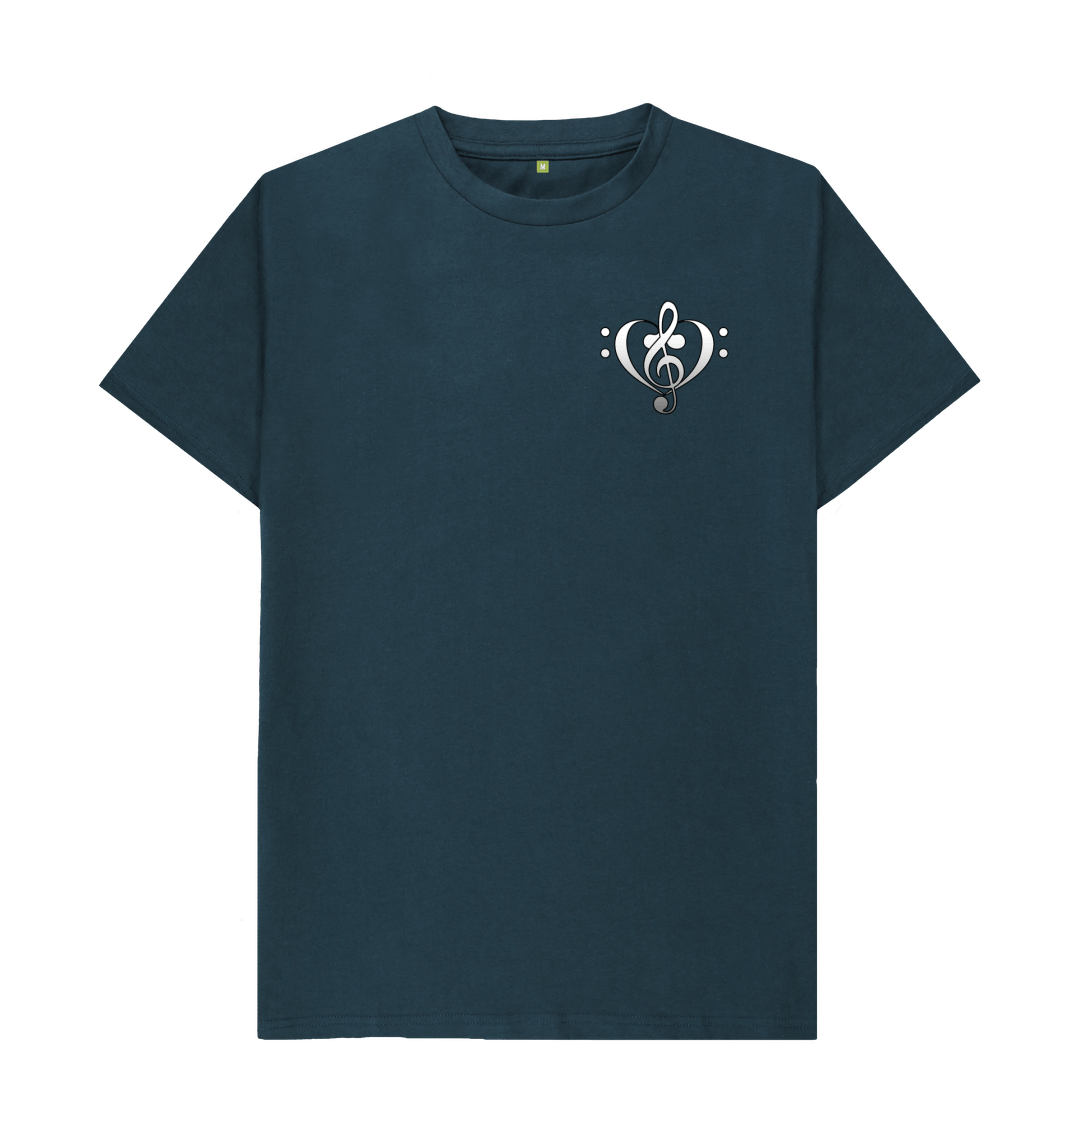 Denim Blue Combined Clef Heart Symbol Graphic Mens T-Shirt